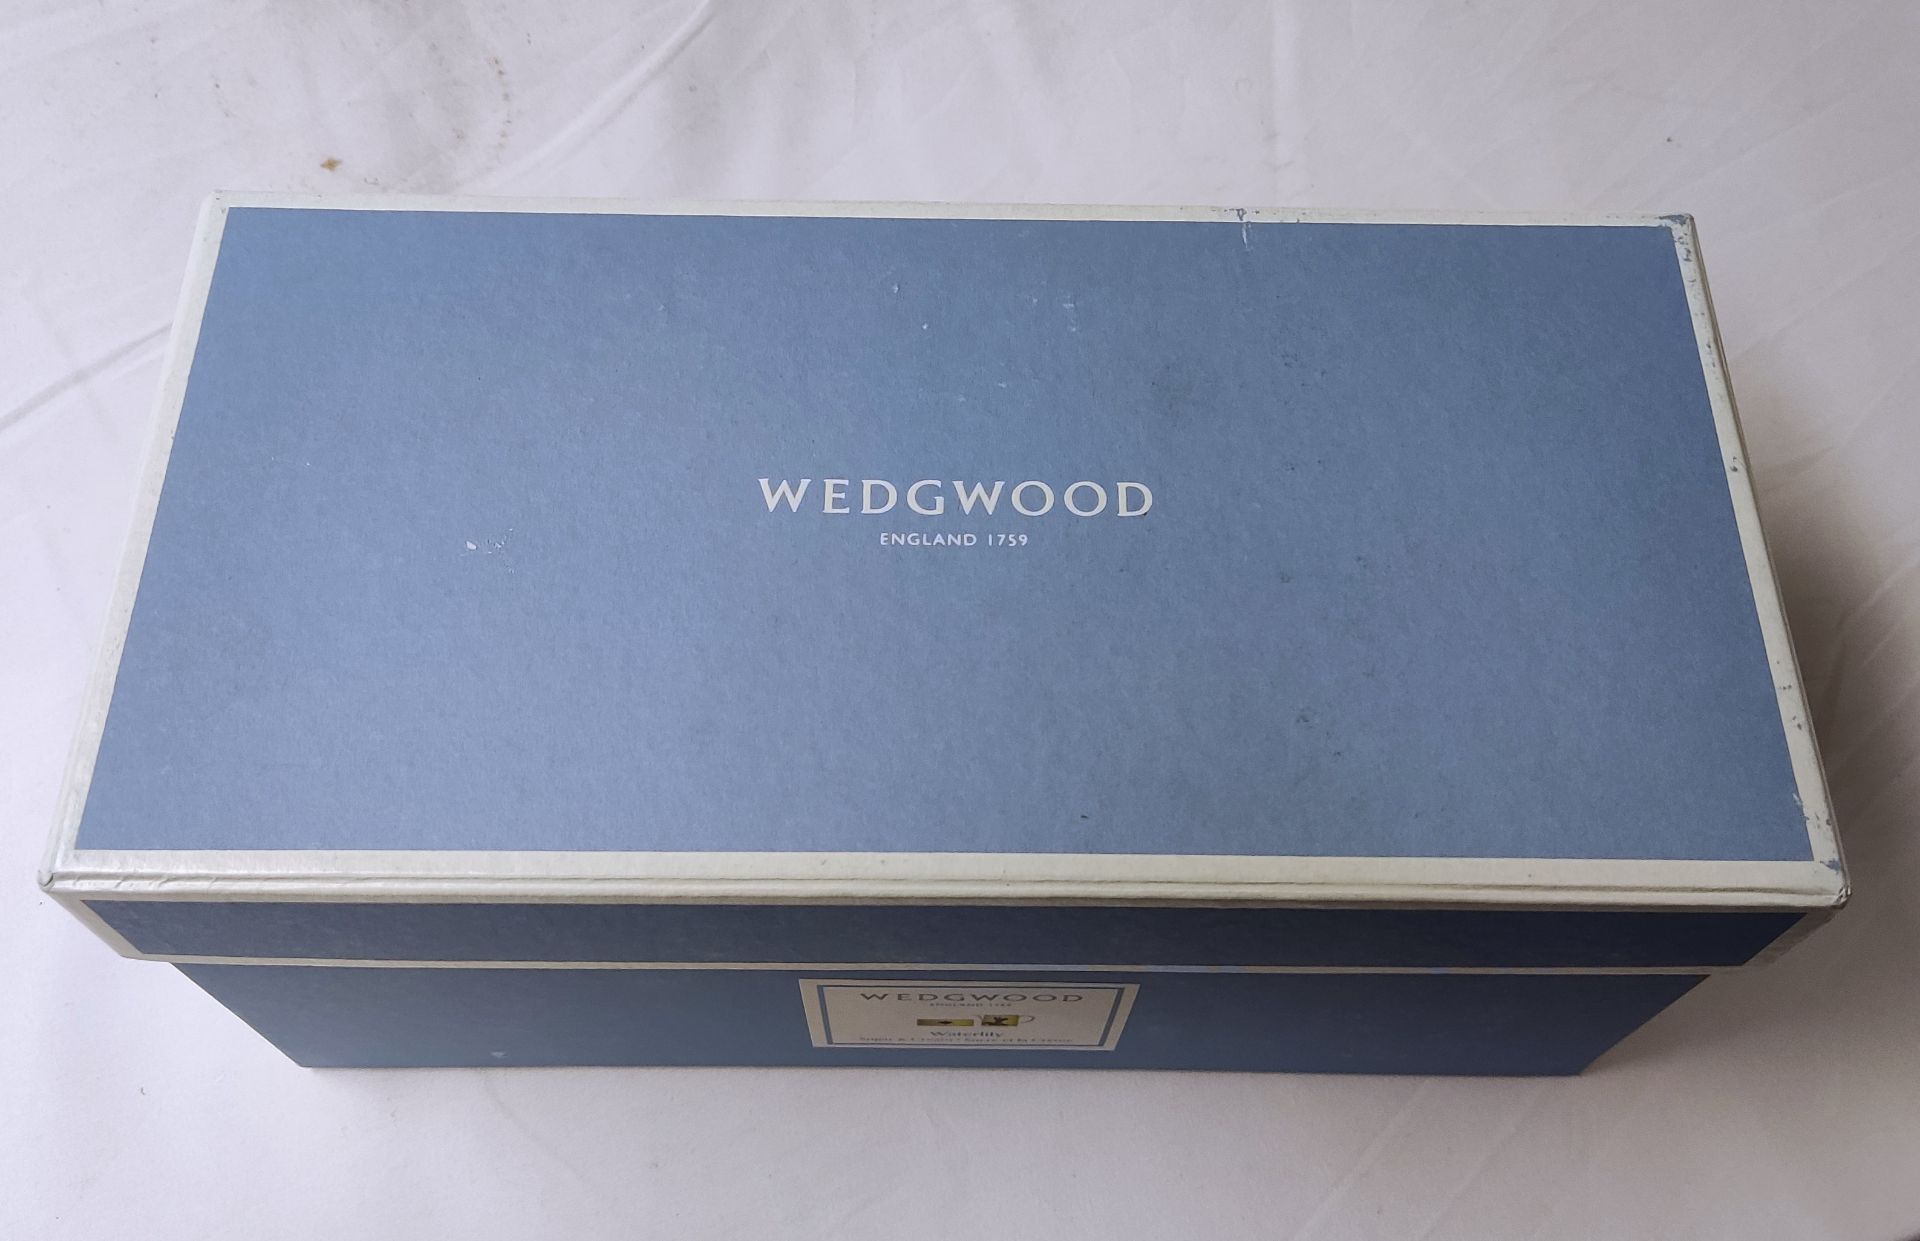 1 x WEDGWOOD Wonderlust Waterlily Fine Bone China Sugar & Creamer Set - New/Boxed - RRP £80 - - Image 4 of 22